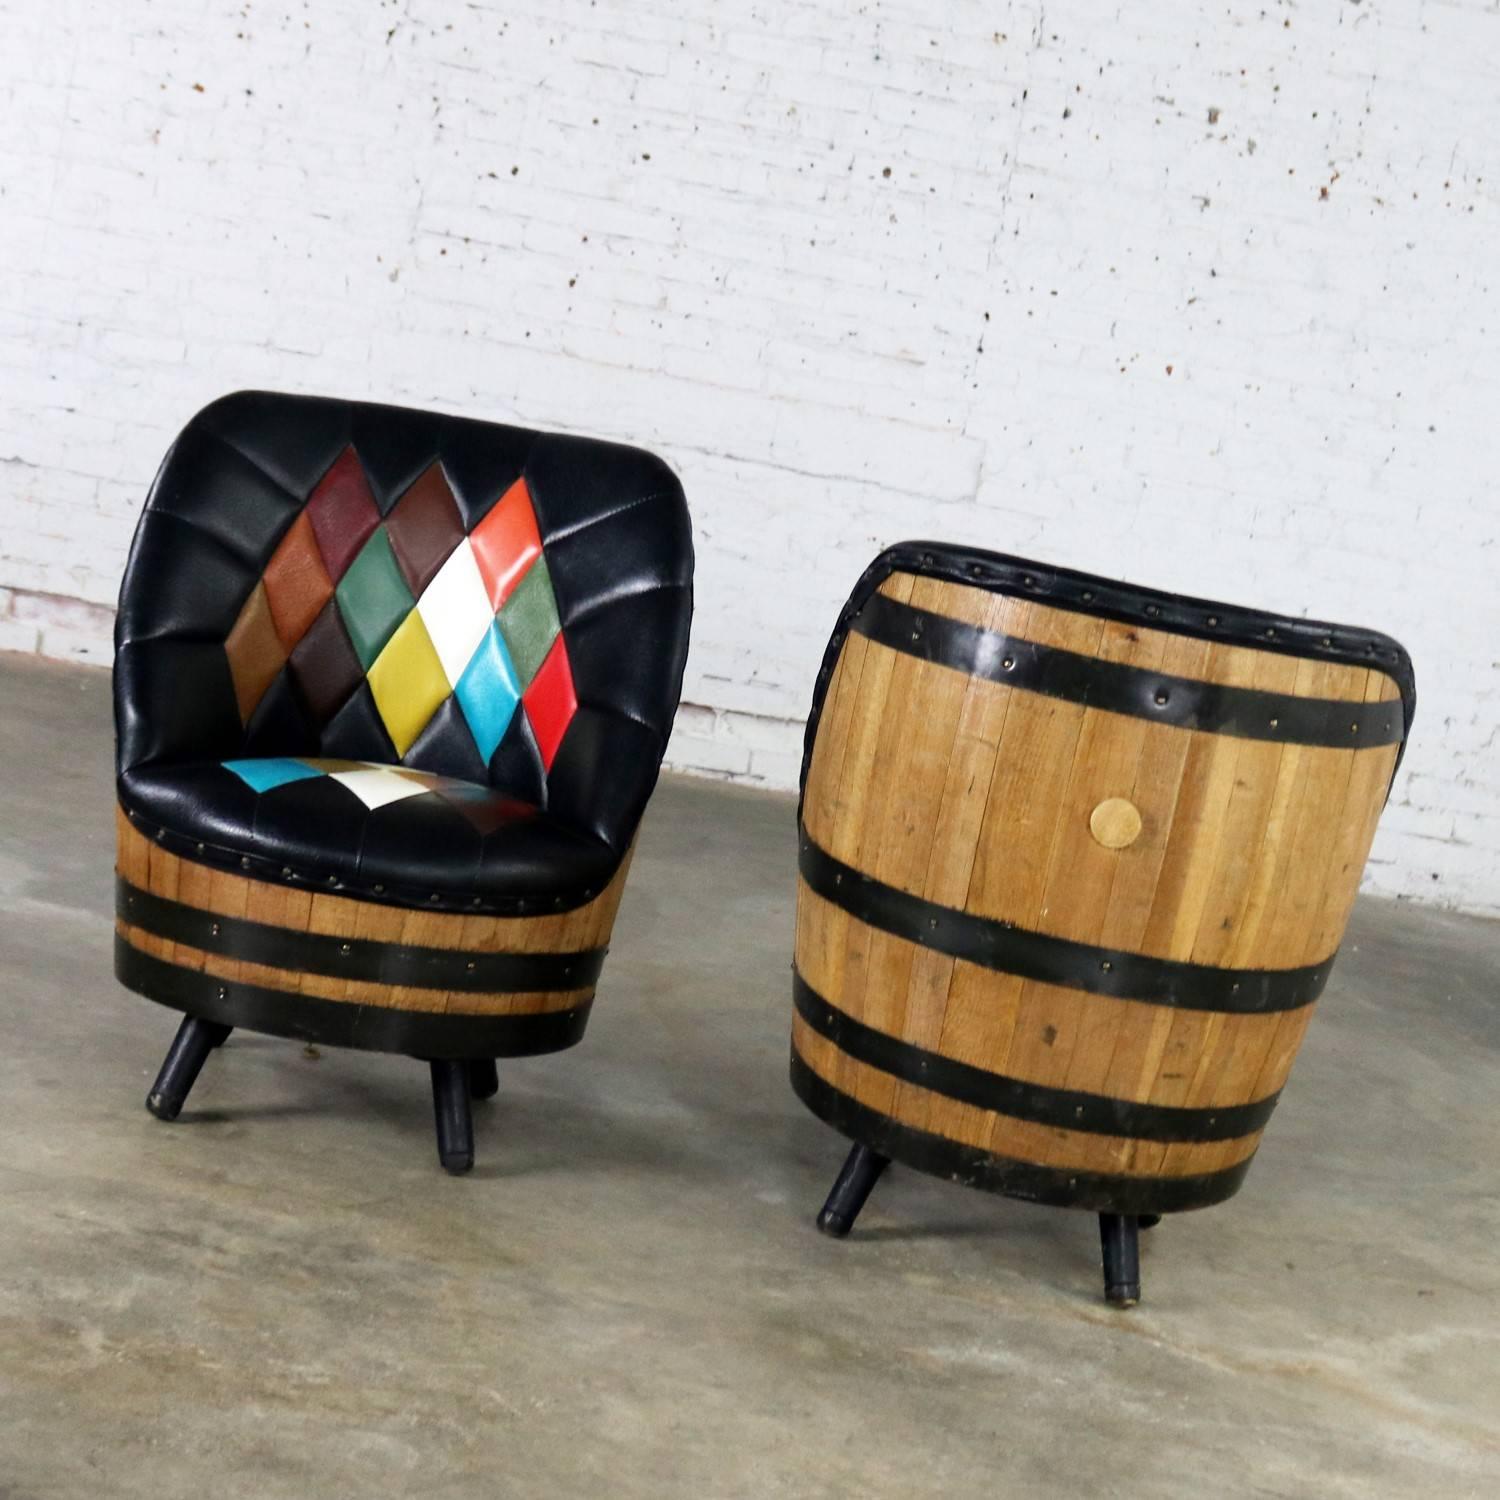 1970s barrel furniture